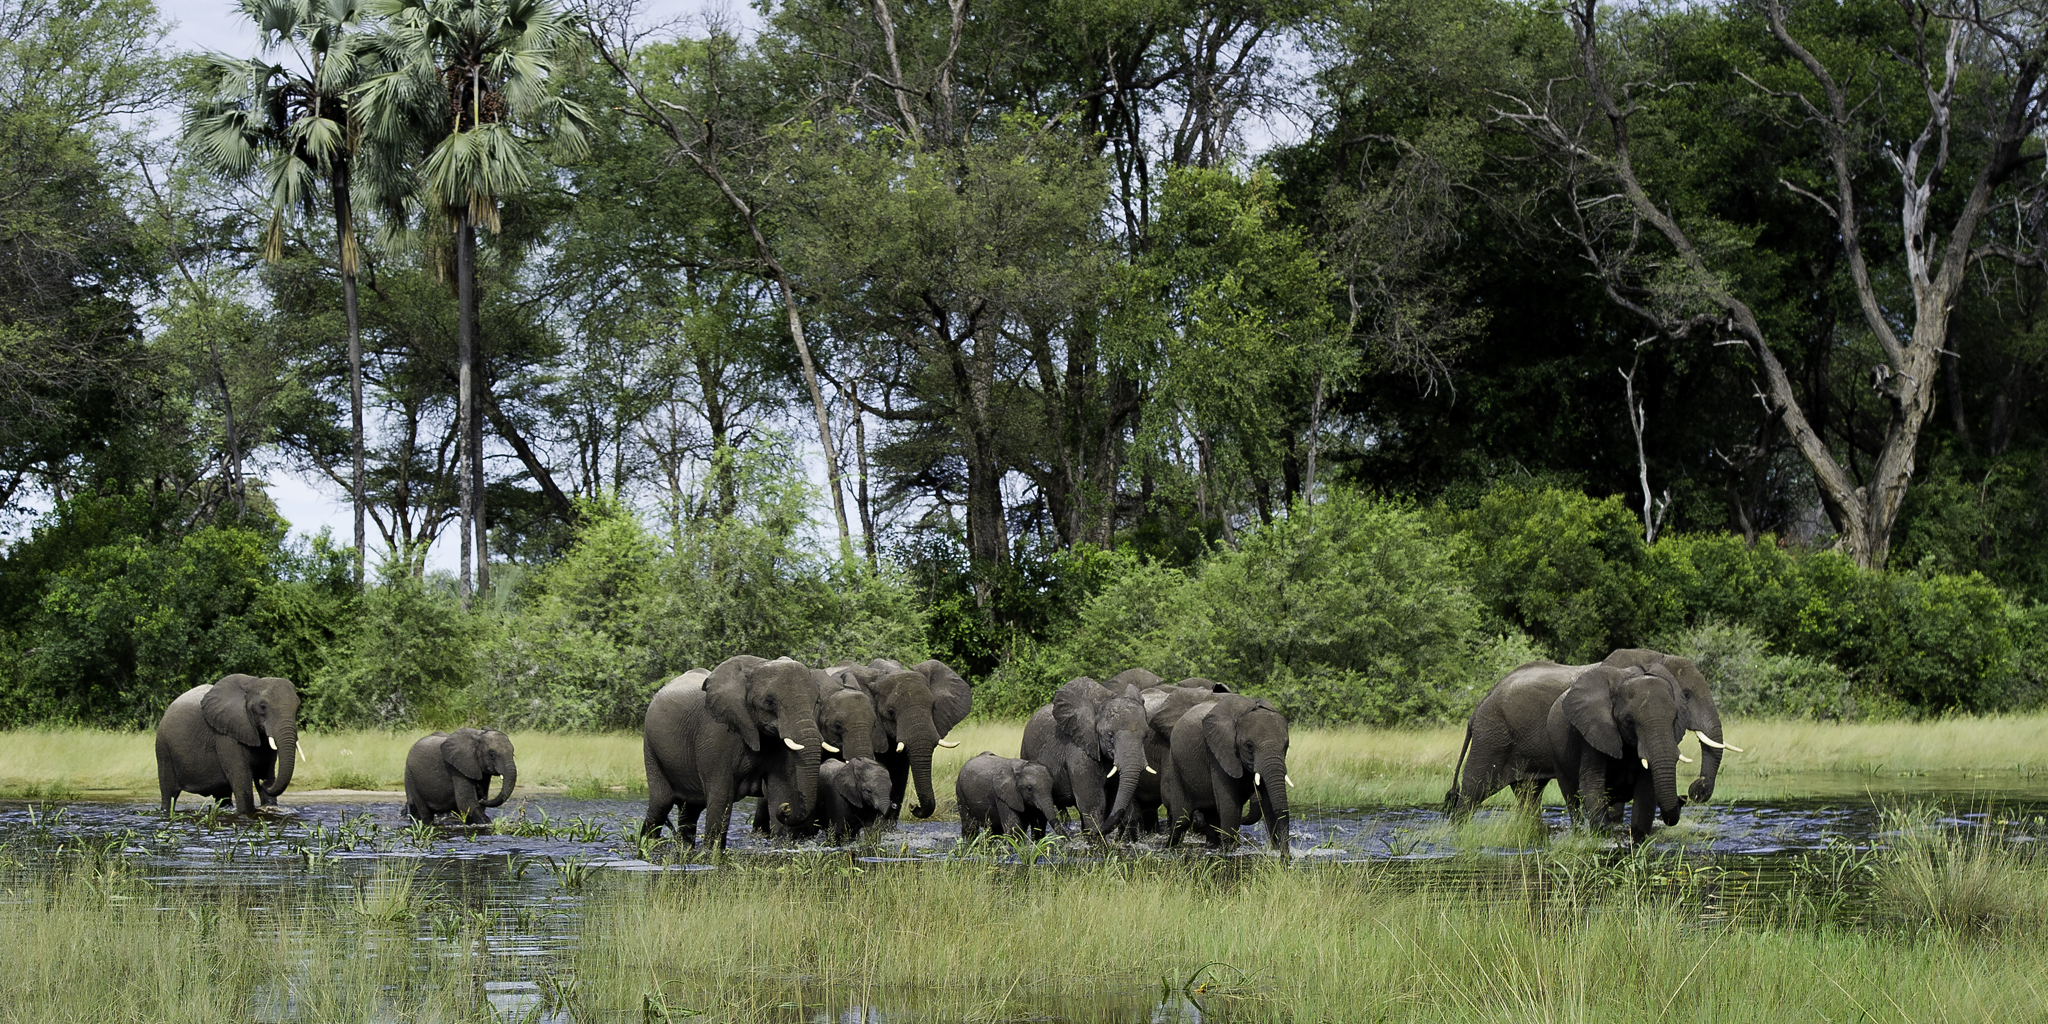 elephants in botswana, africa safari destinations 